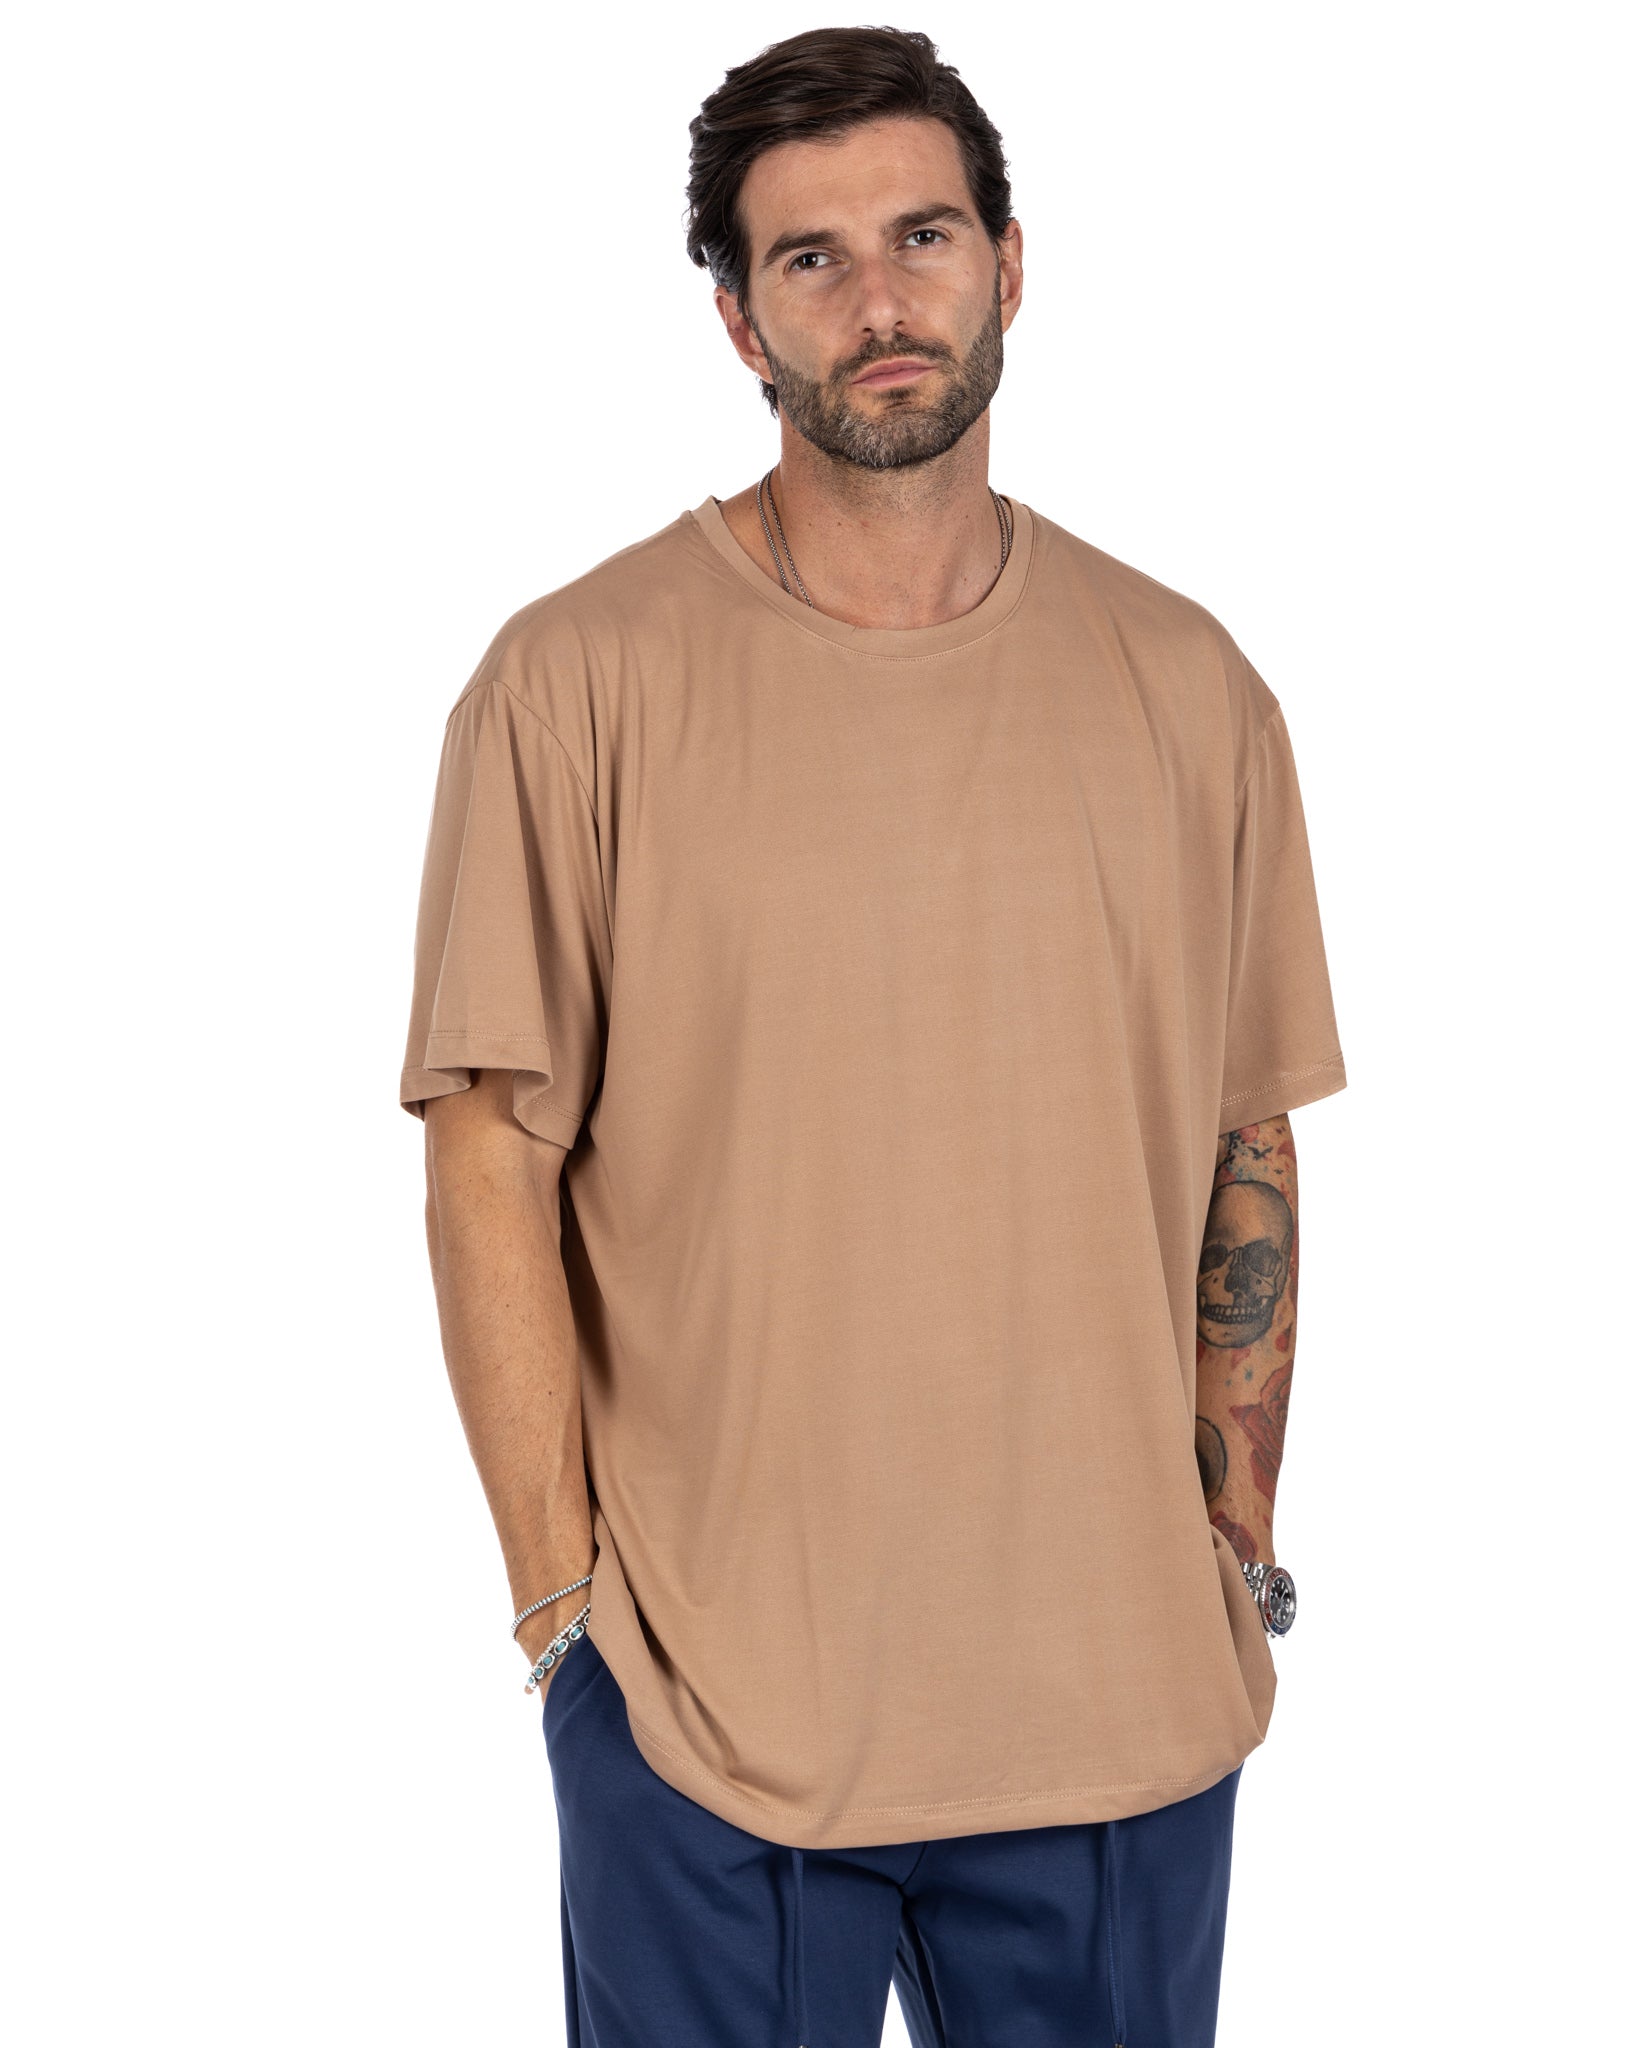 Owen - oversized beige t-shirt